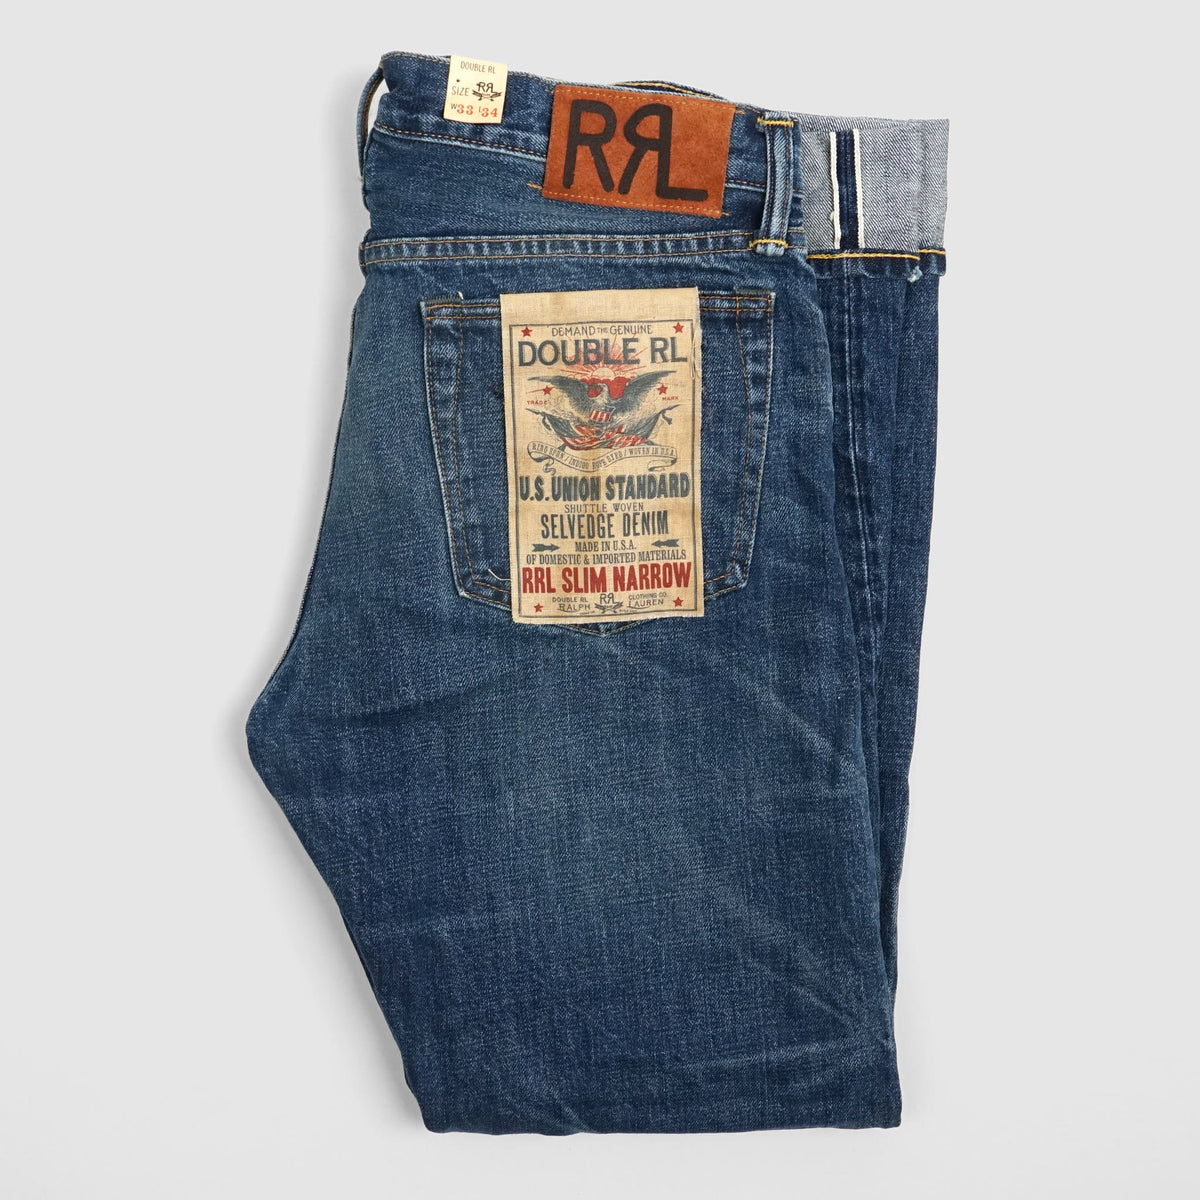 Double RL Selvage Denim Jeans Slim Narrow